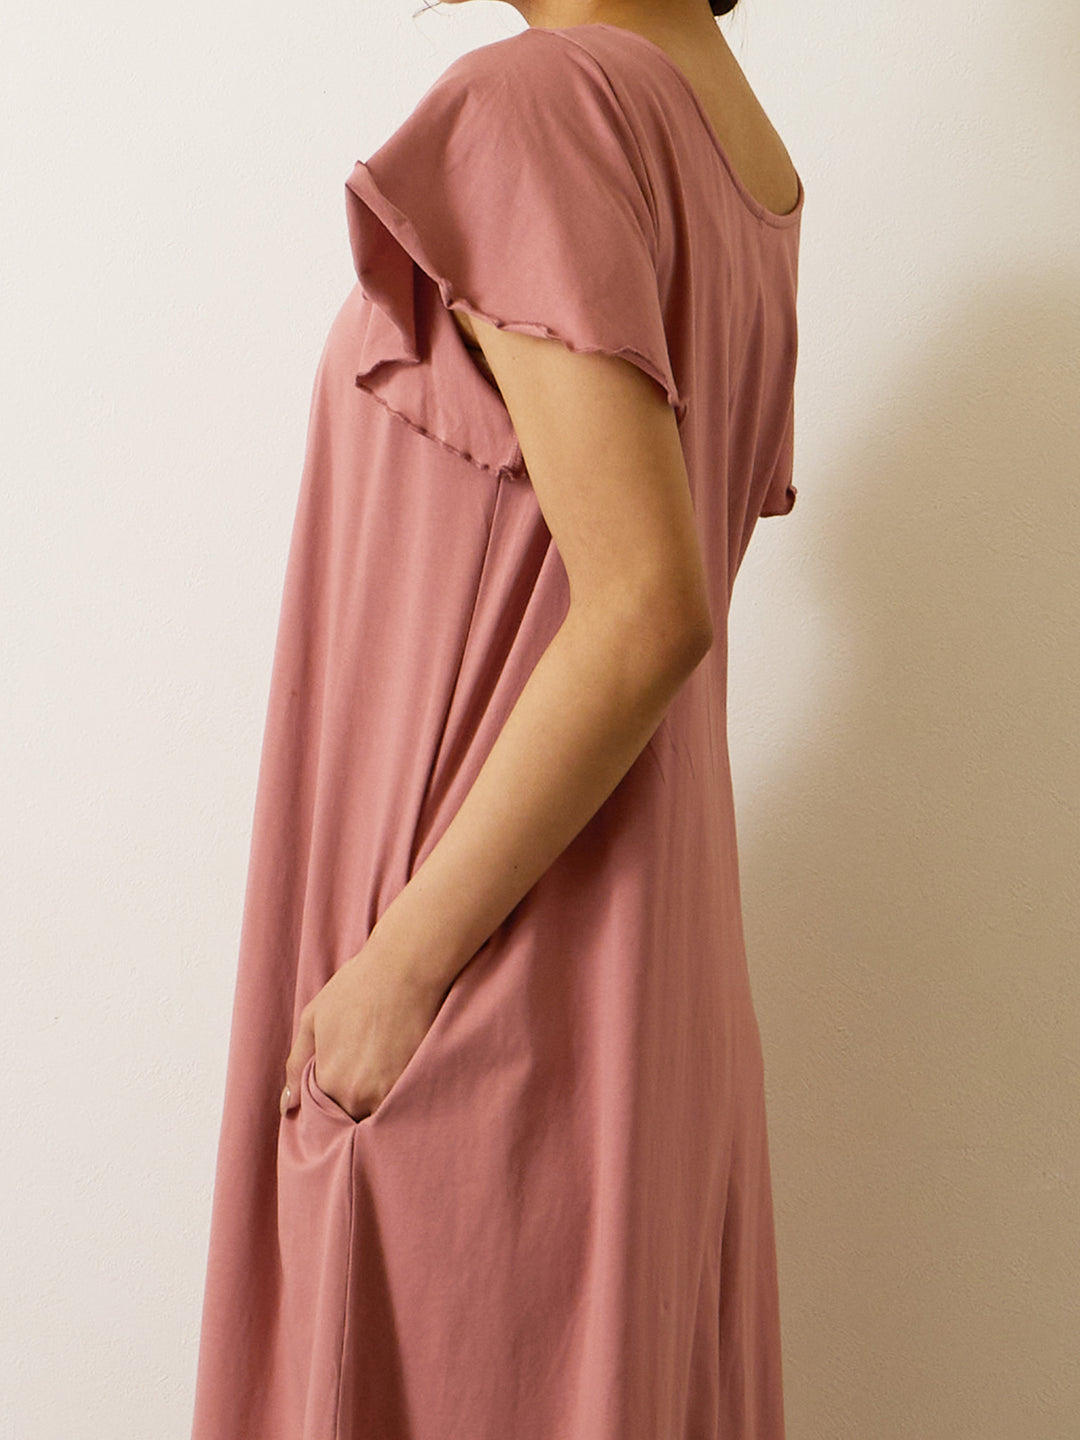 [Maternity/nursing clothes] Room dress Pink